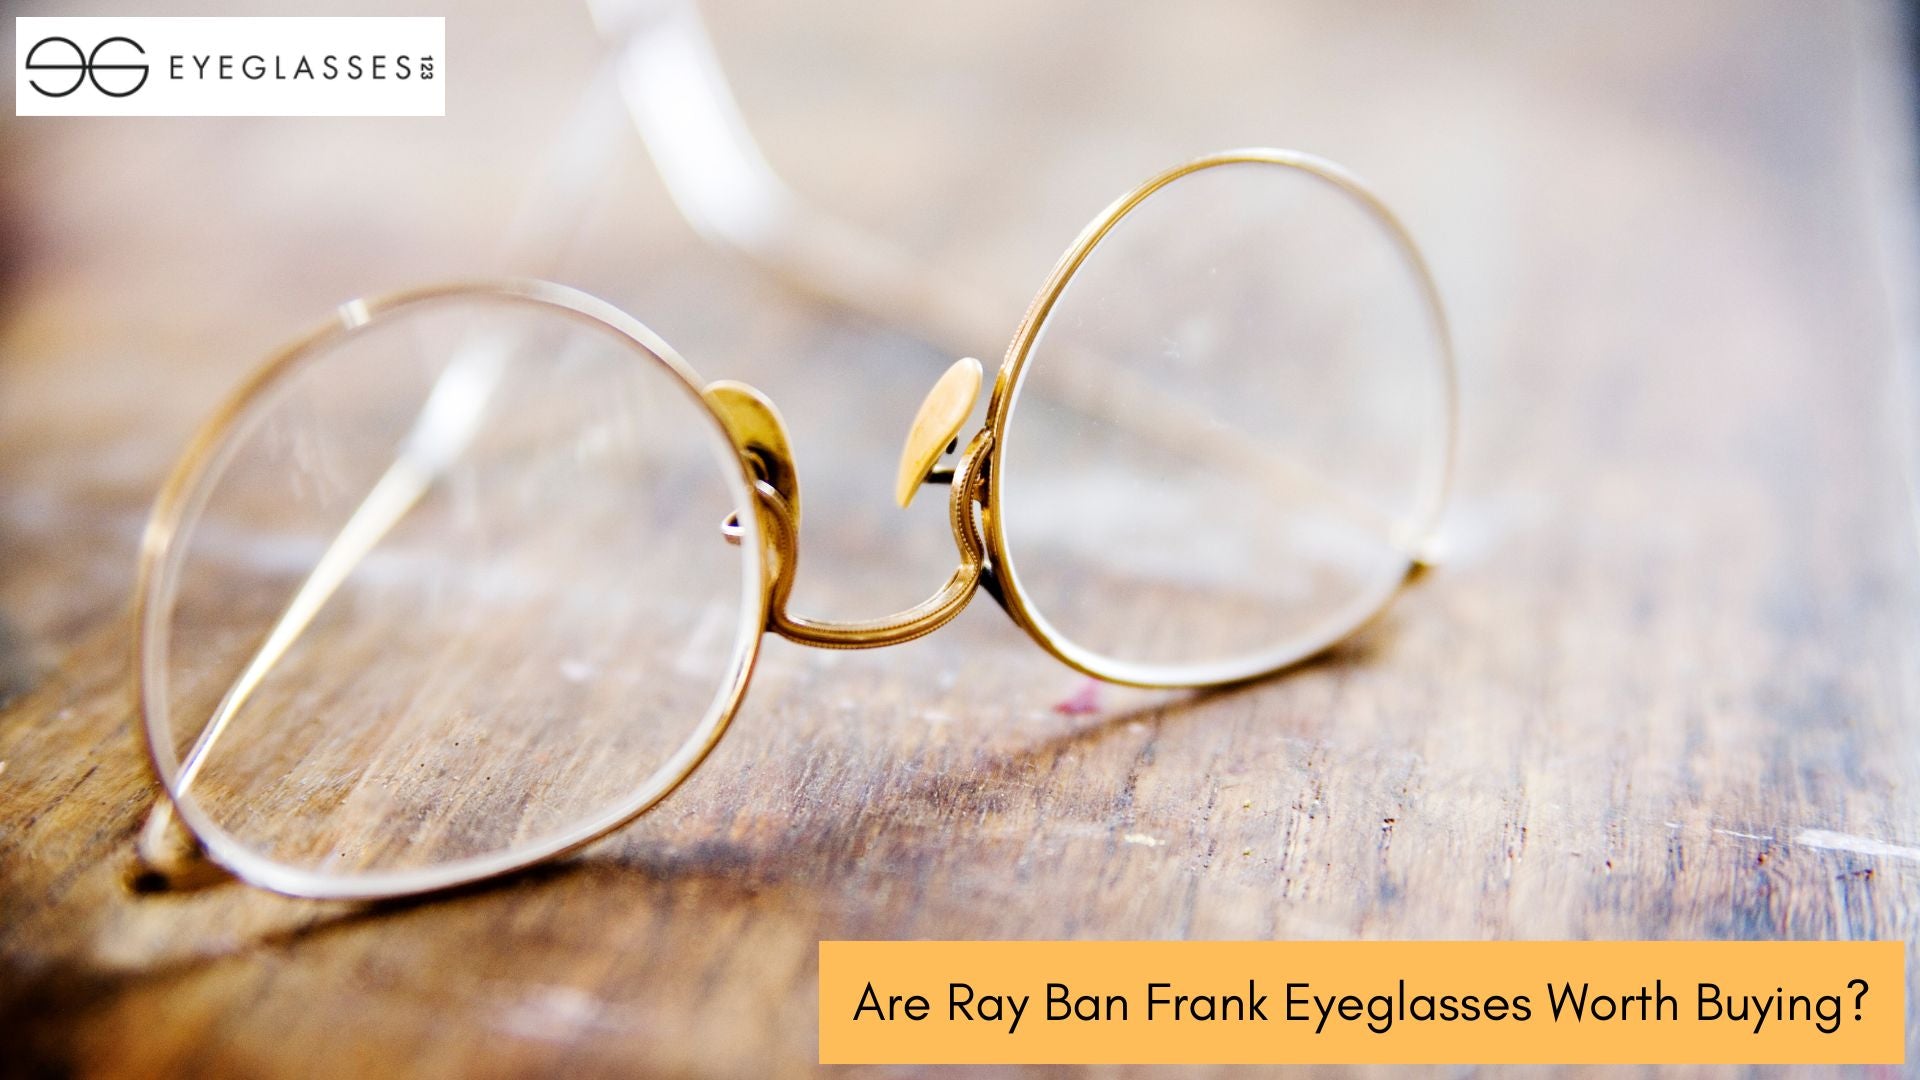 Are Ray Ban Frank Eyeglasses Worth Buying?